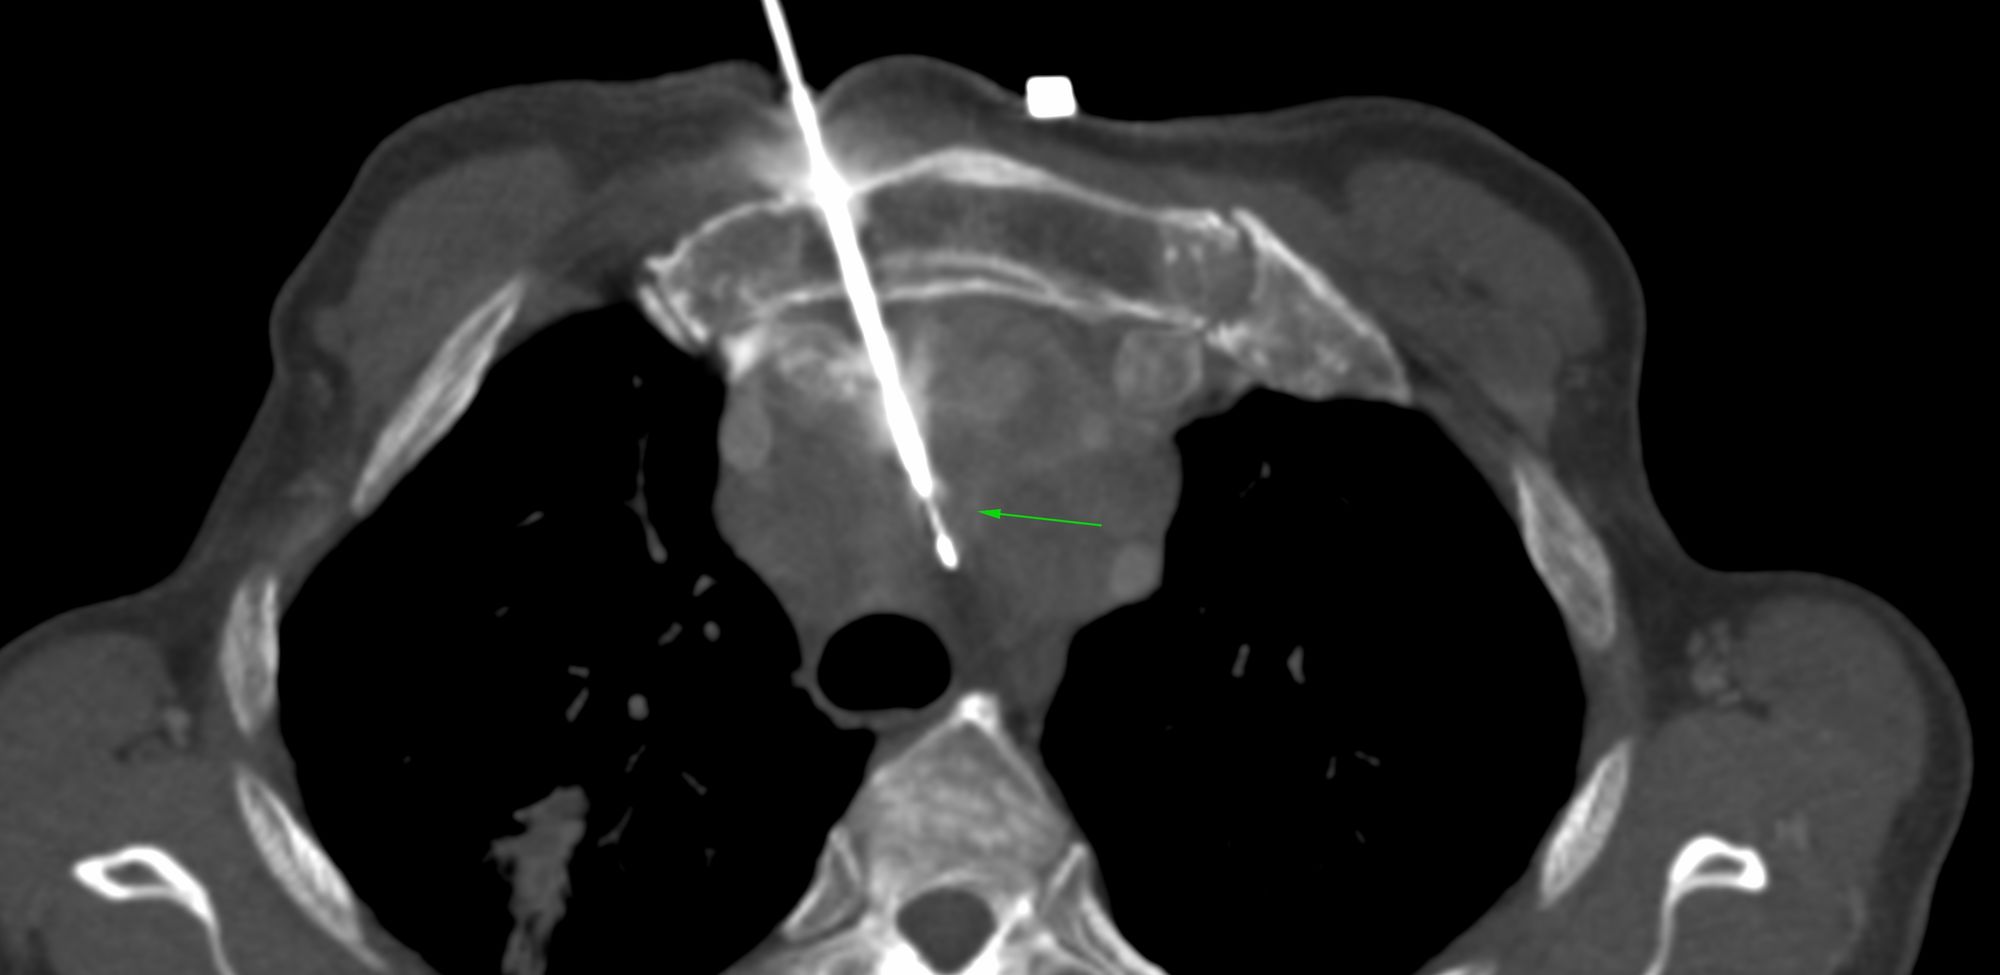 Case 38: Transsternal Biopsy of a Pretracheal Space Mediastinal Mass